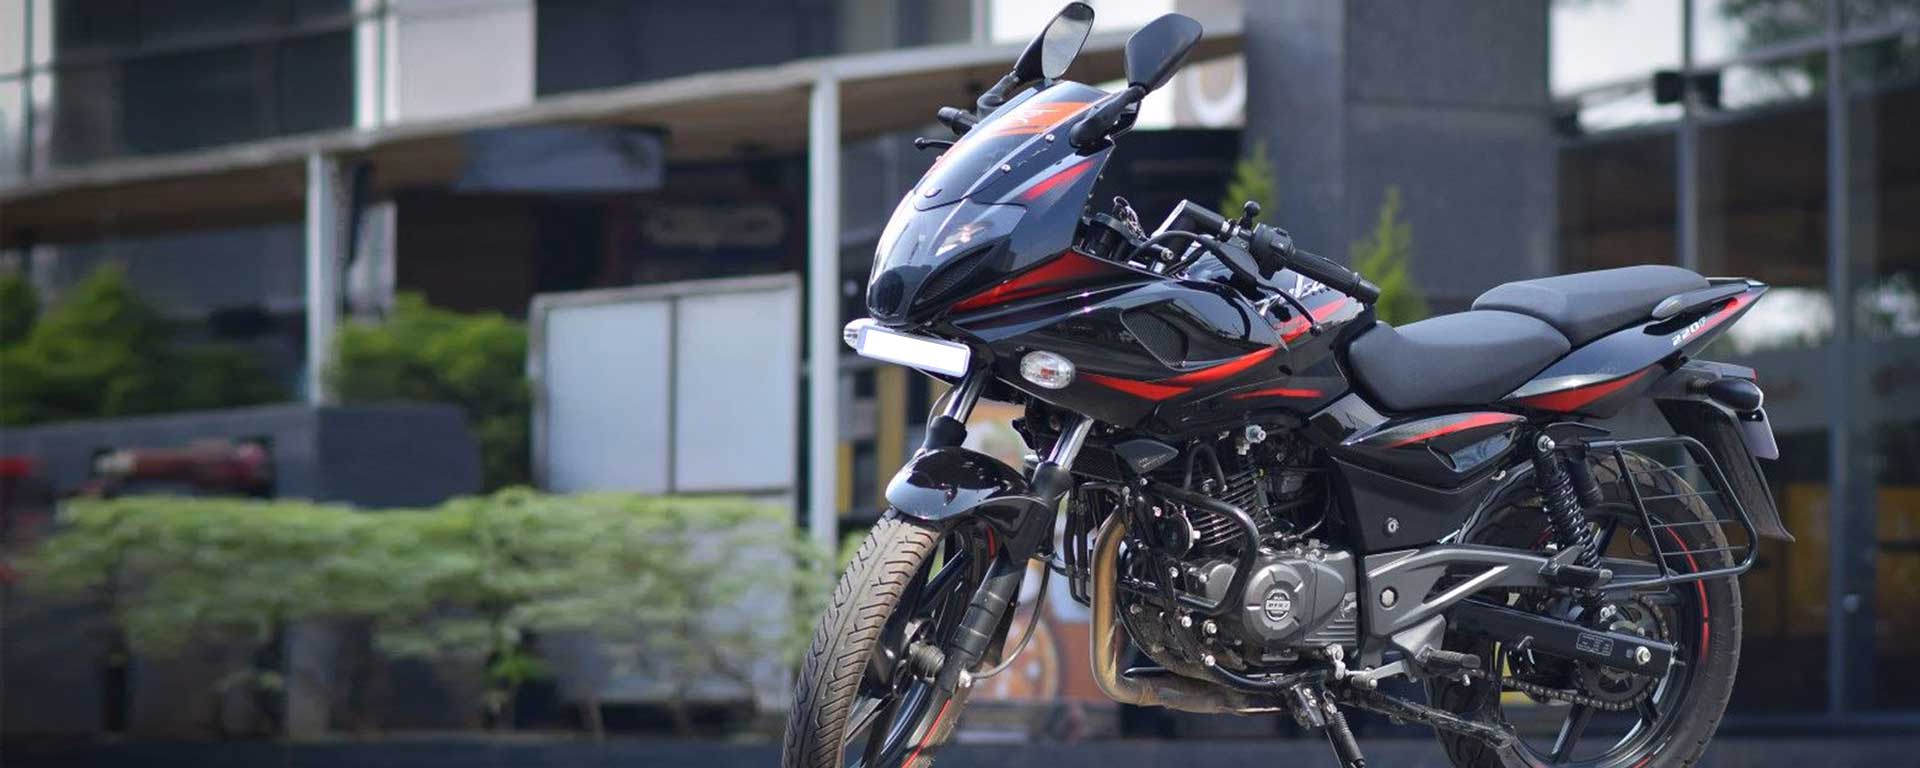 Maharjan Bikes Rental - Complete solution for motorbike hire in Nepal